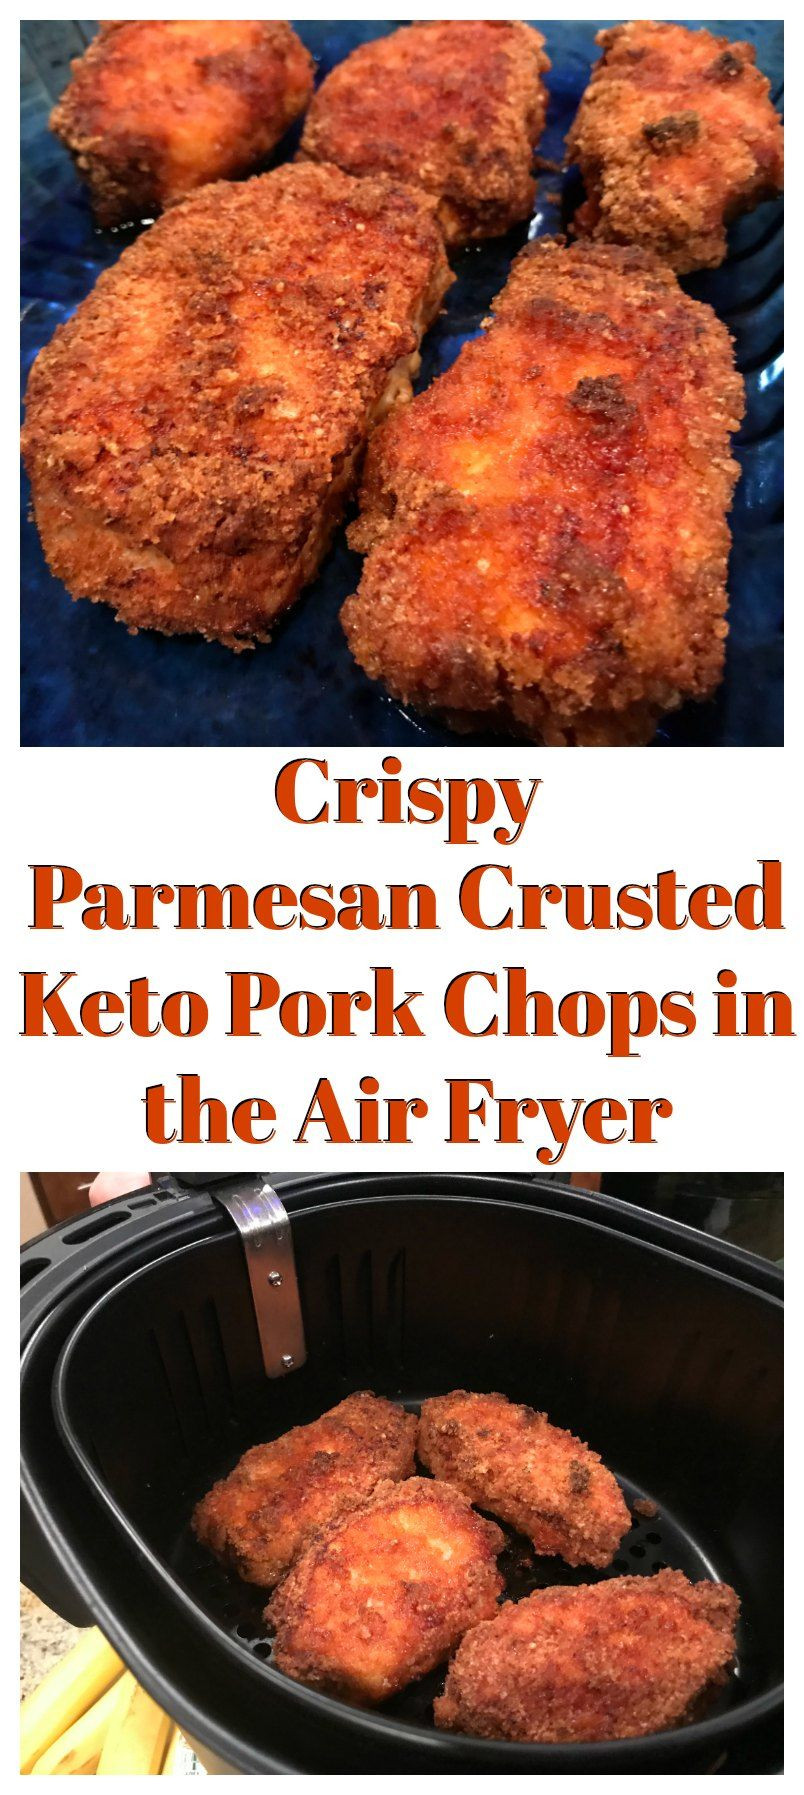 Air Fryer Keto Pork Chops Boneless
 Crispy Keto Parmesan Crusted Pork Chops in the Air Fryer